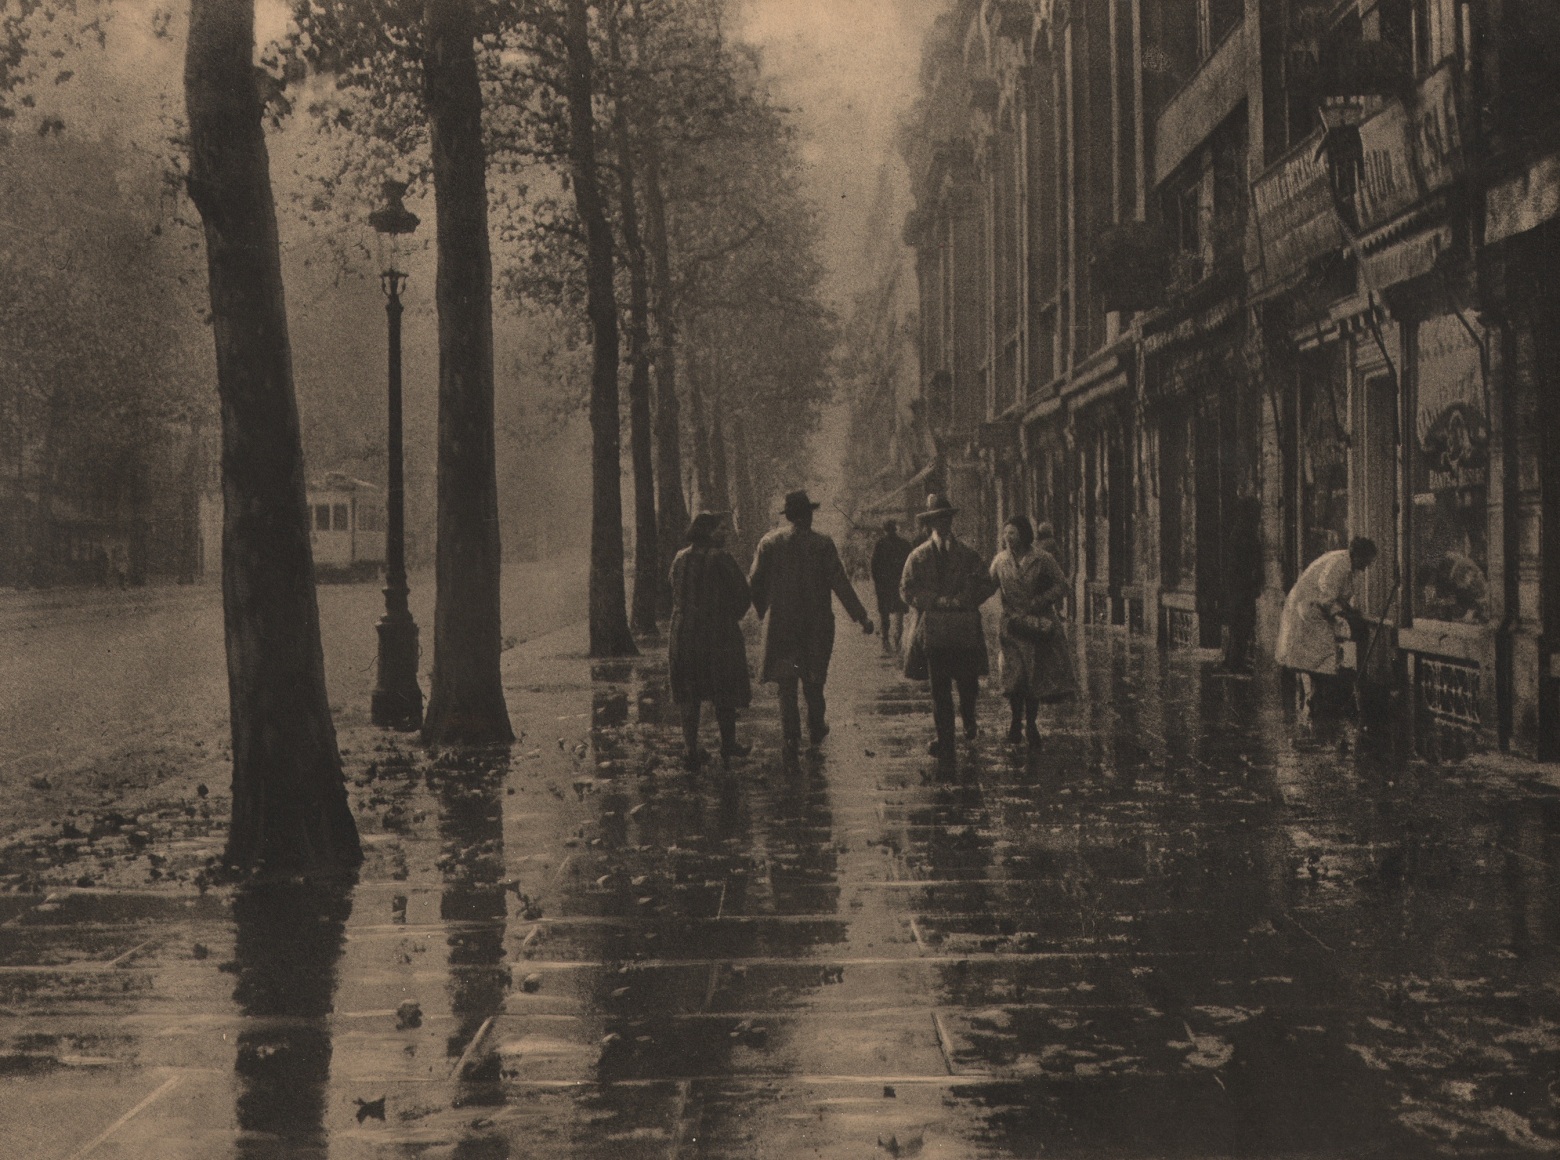 02. L&eacute;onard Misonne, Untitled, c. 1932. Pedestrians walk a tree-lined, wet sidewalk. Sepia-toned print.